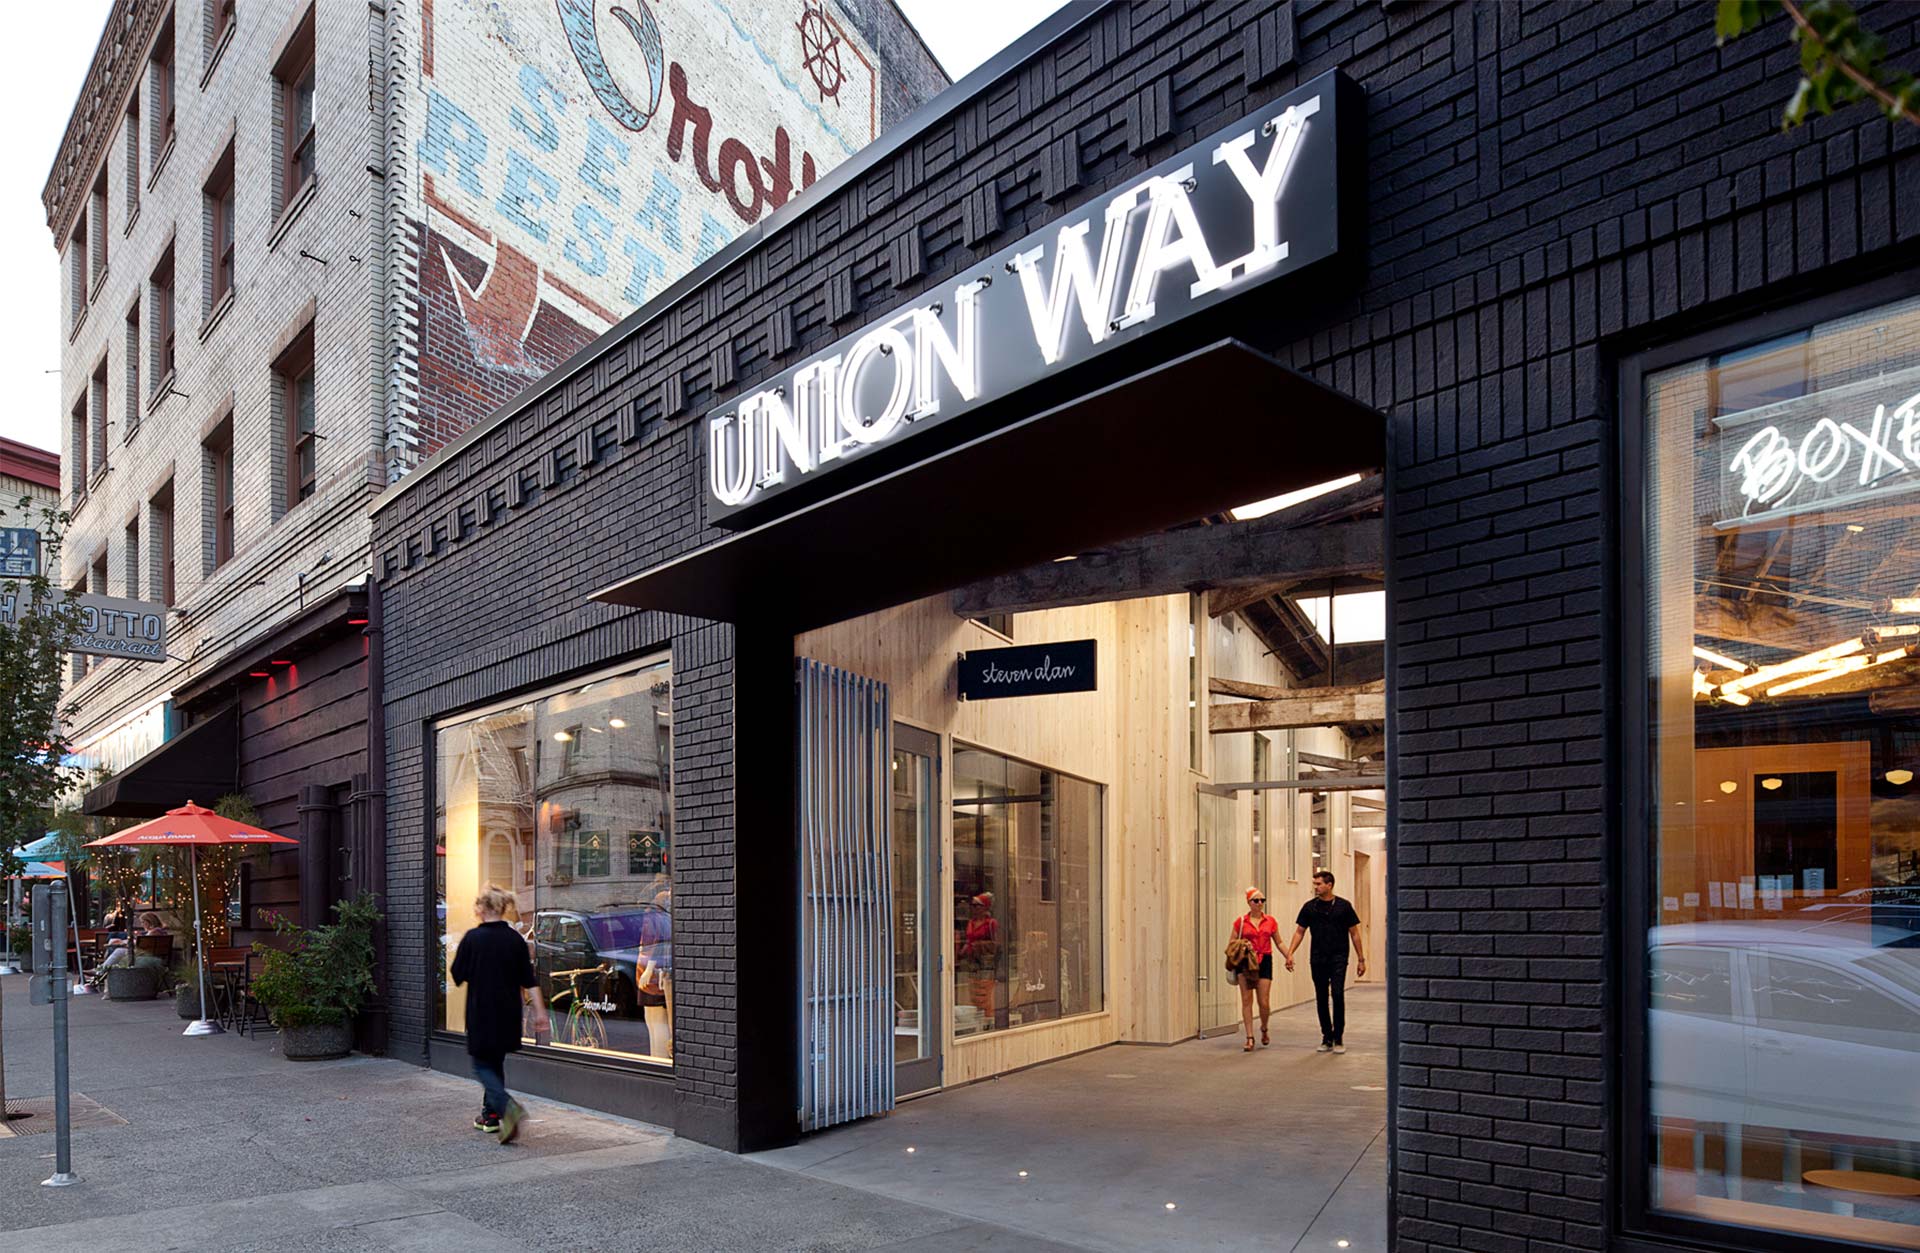 Union Way shops